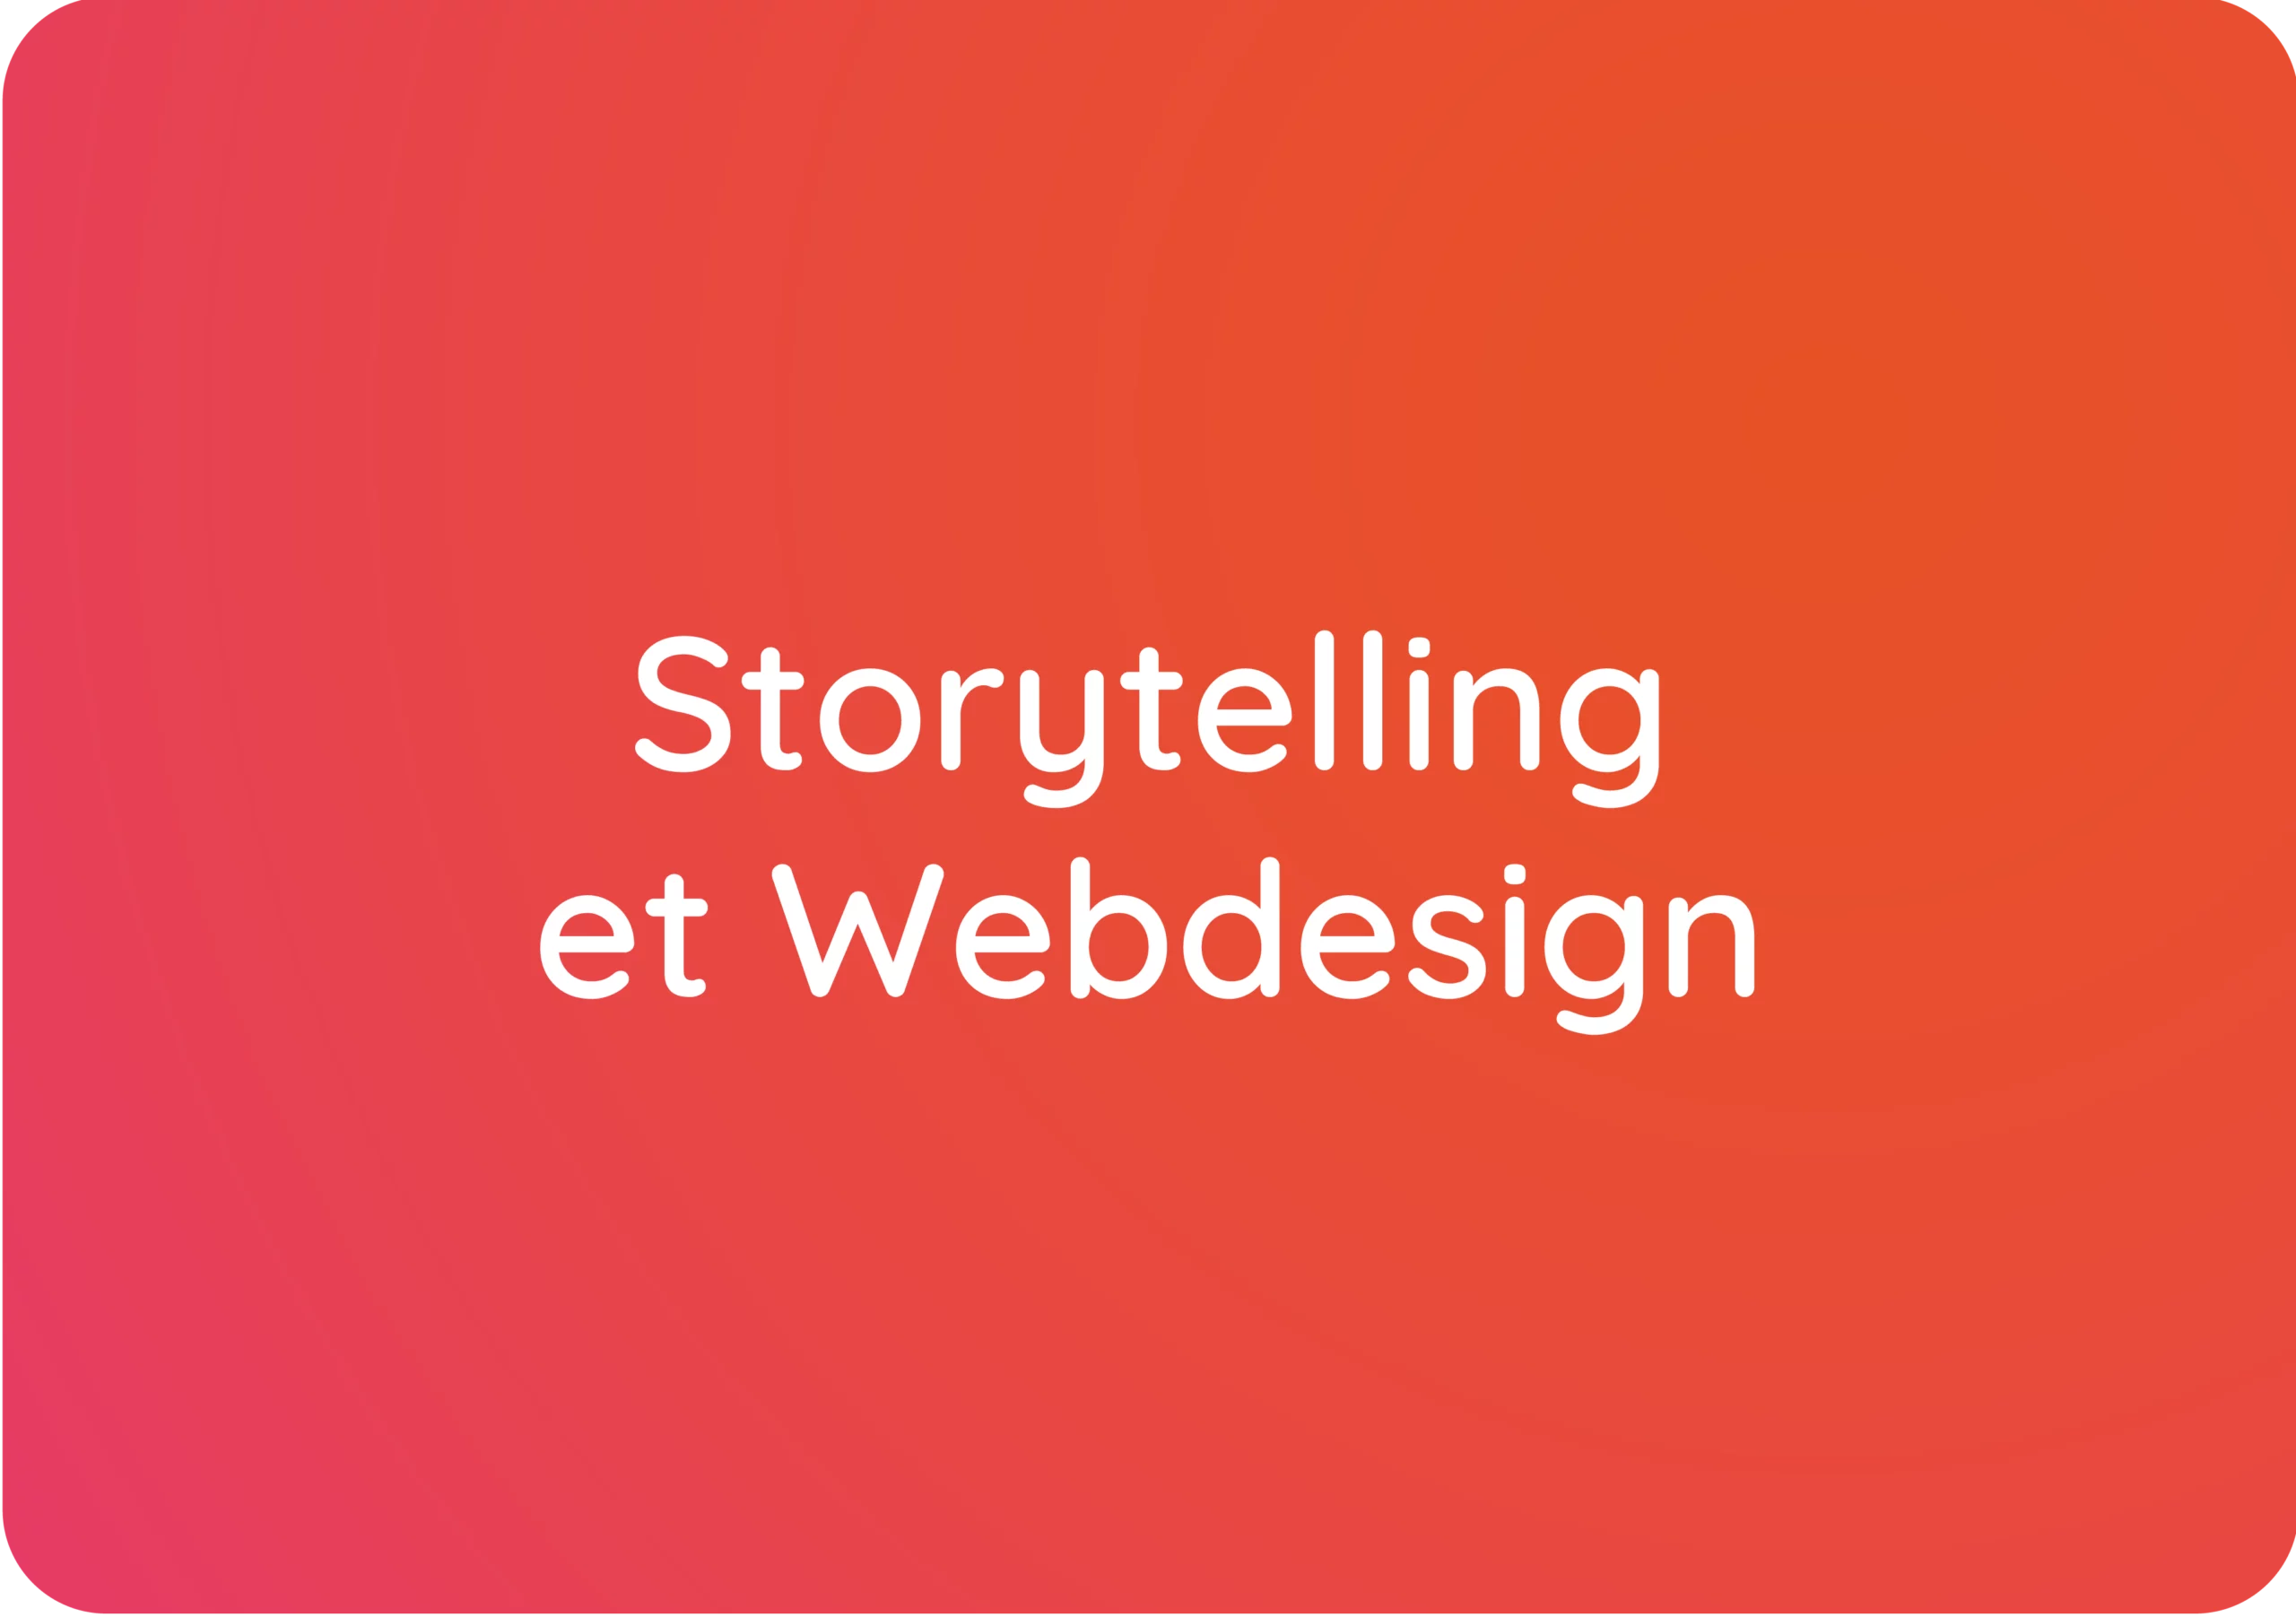 Storytelling et web design exceptionnel